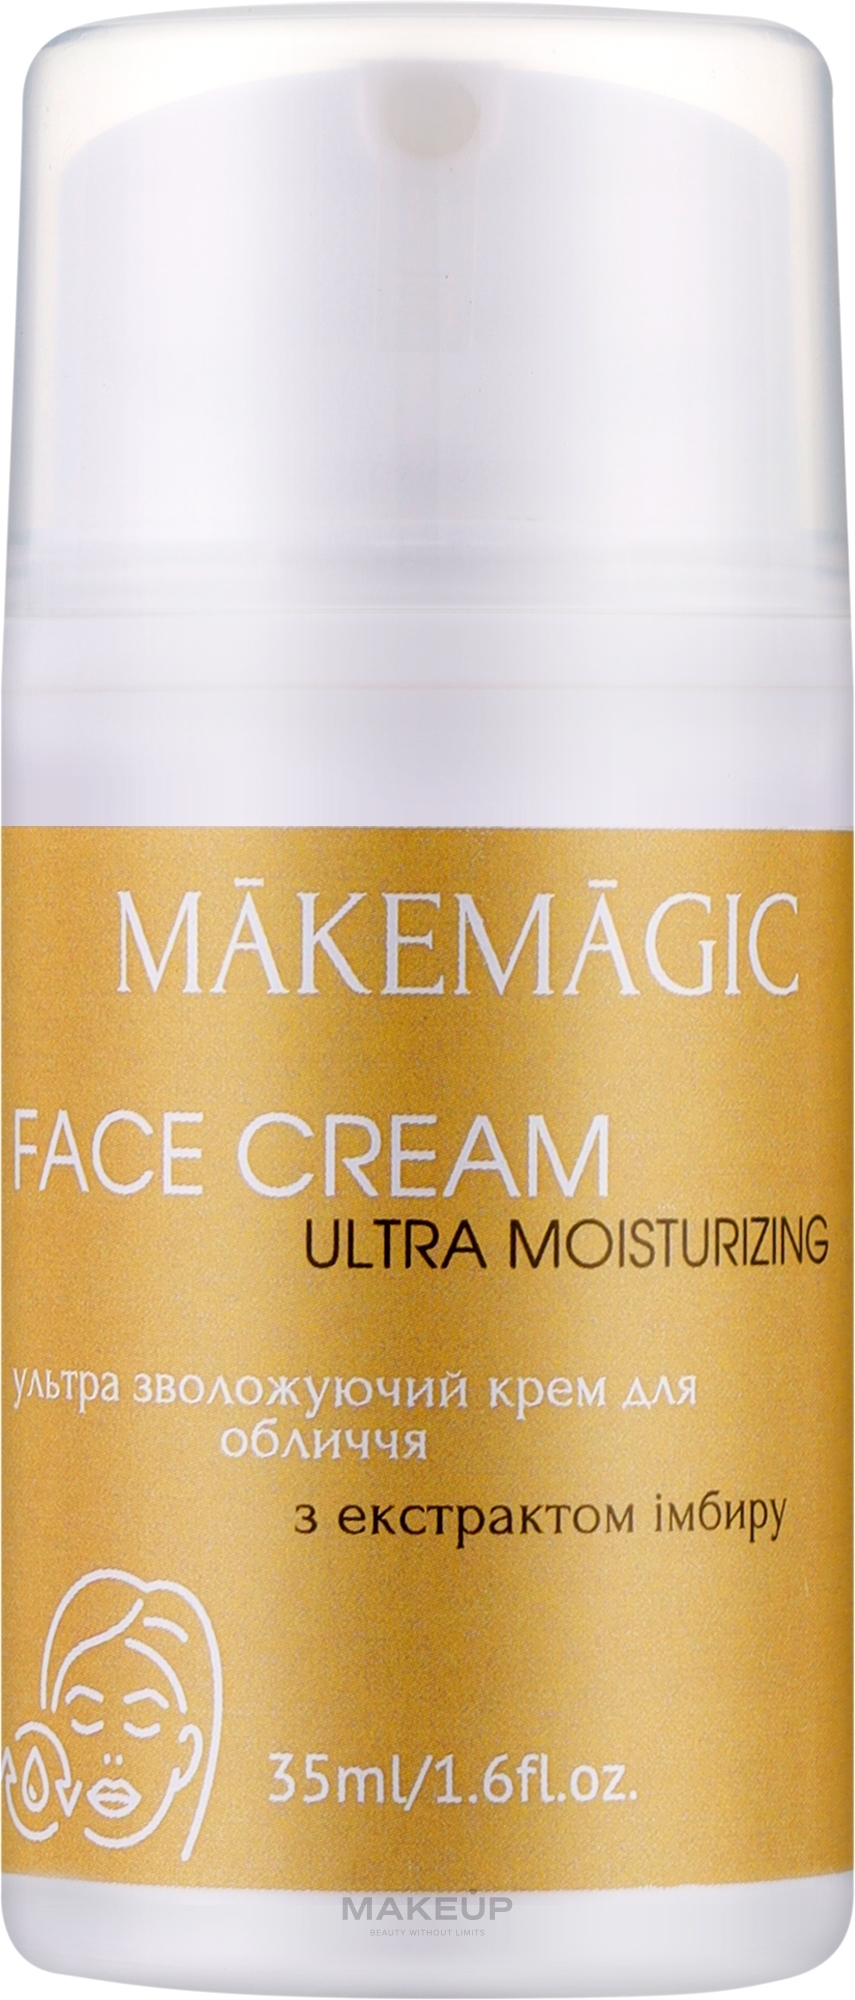 Ультразволожуючий крем для обличчя з экстрактом імбиру - Makemagic Ultra Moisturizing Face Cream — фото 35ml